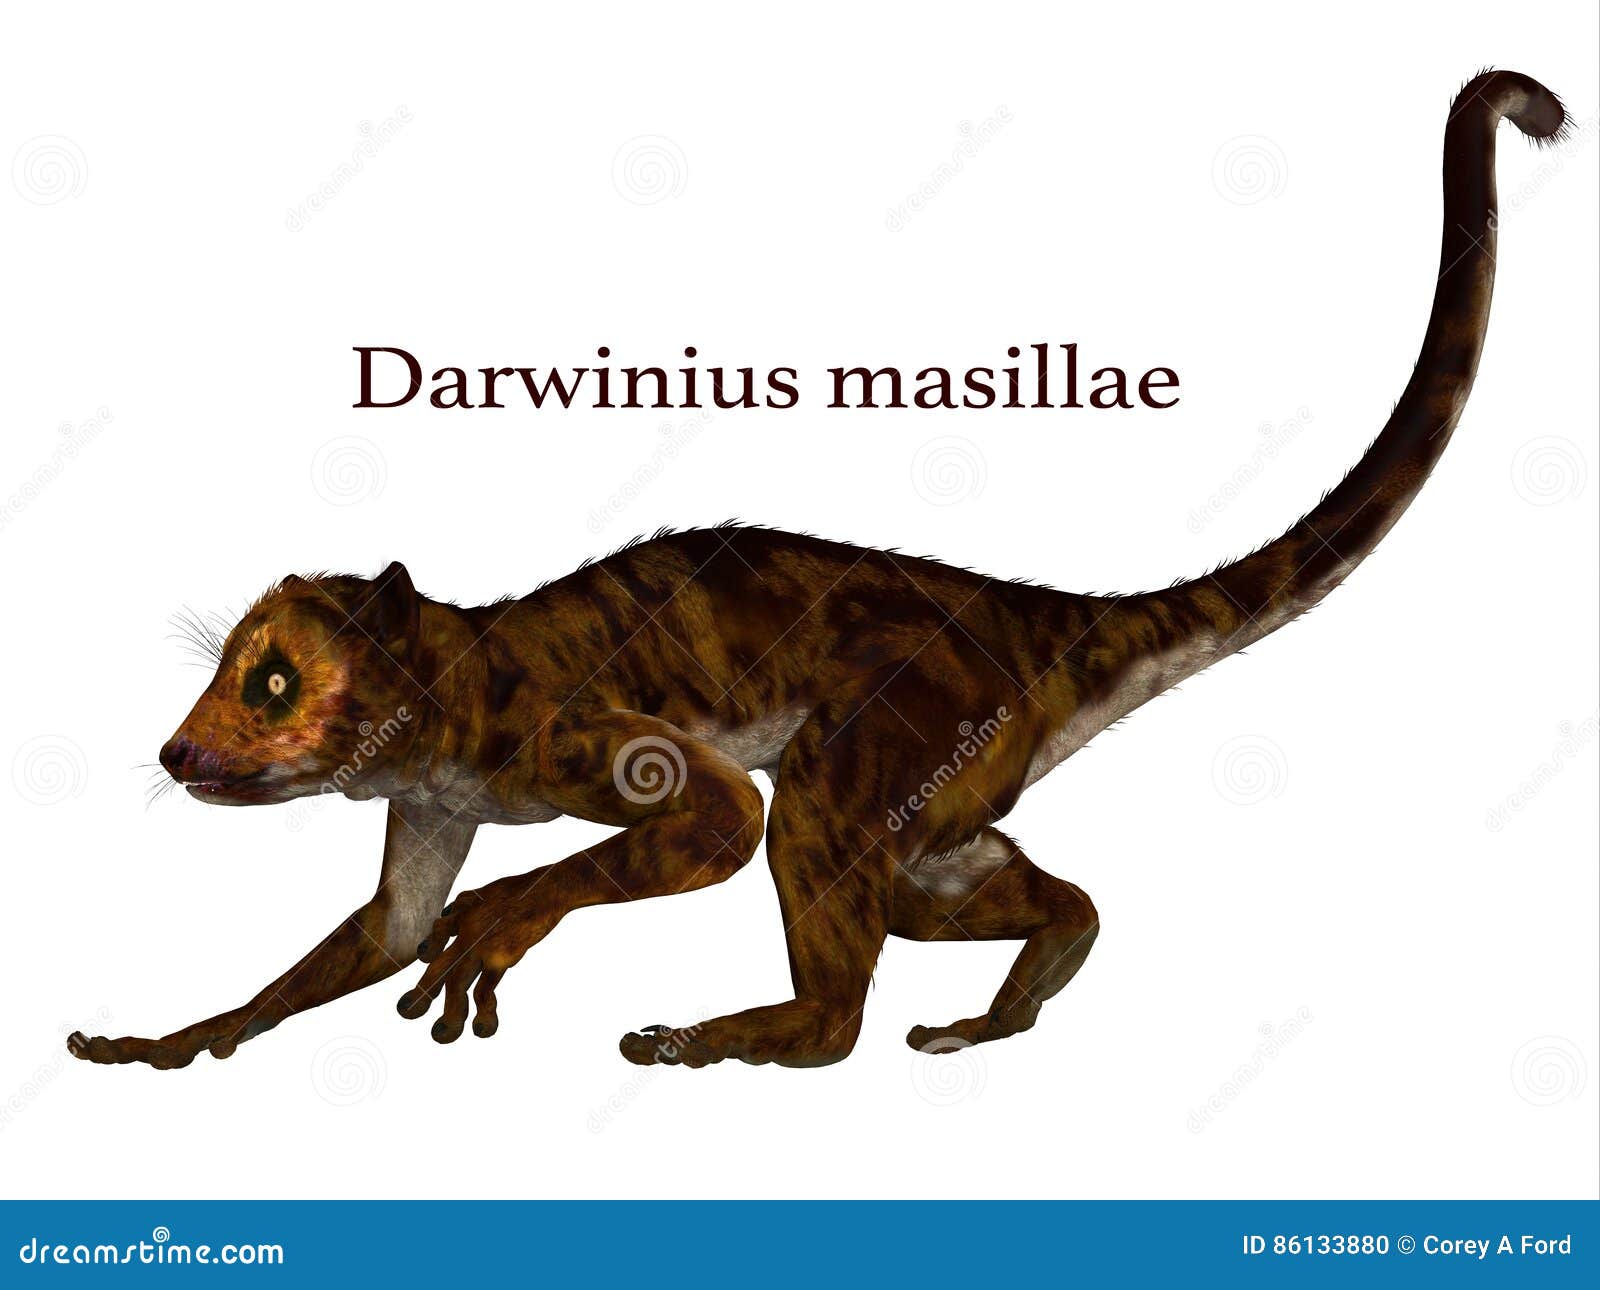 darwinius primate with font